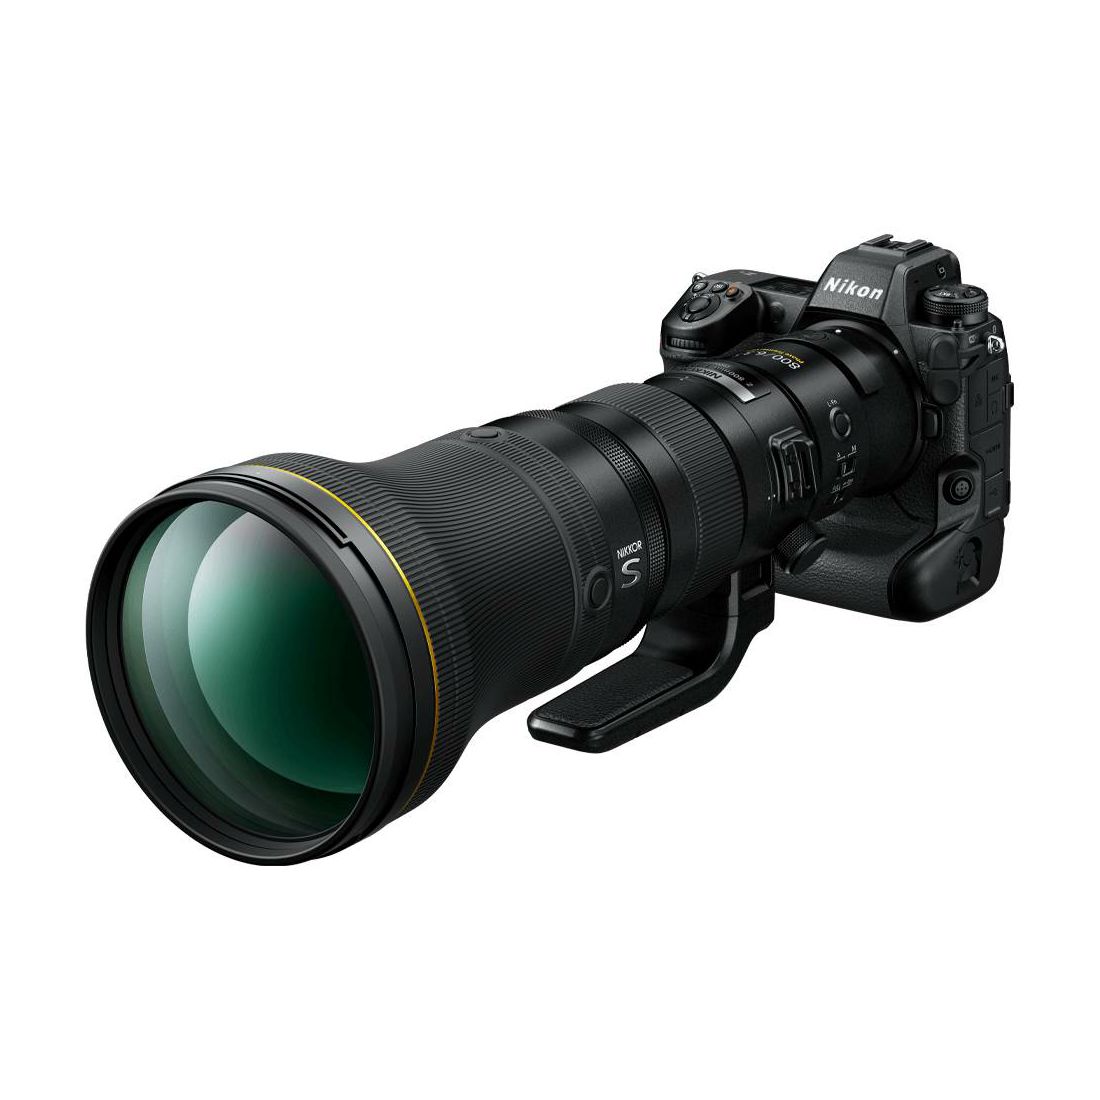 Nikon Z 800mm f/6.3 VR S telefoto objektiv